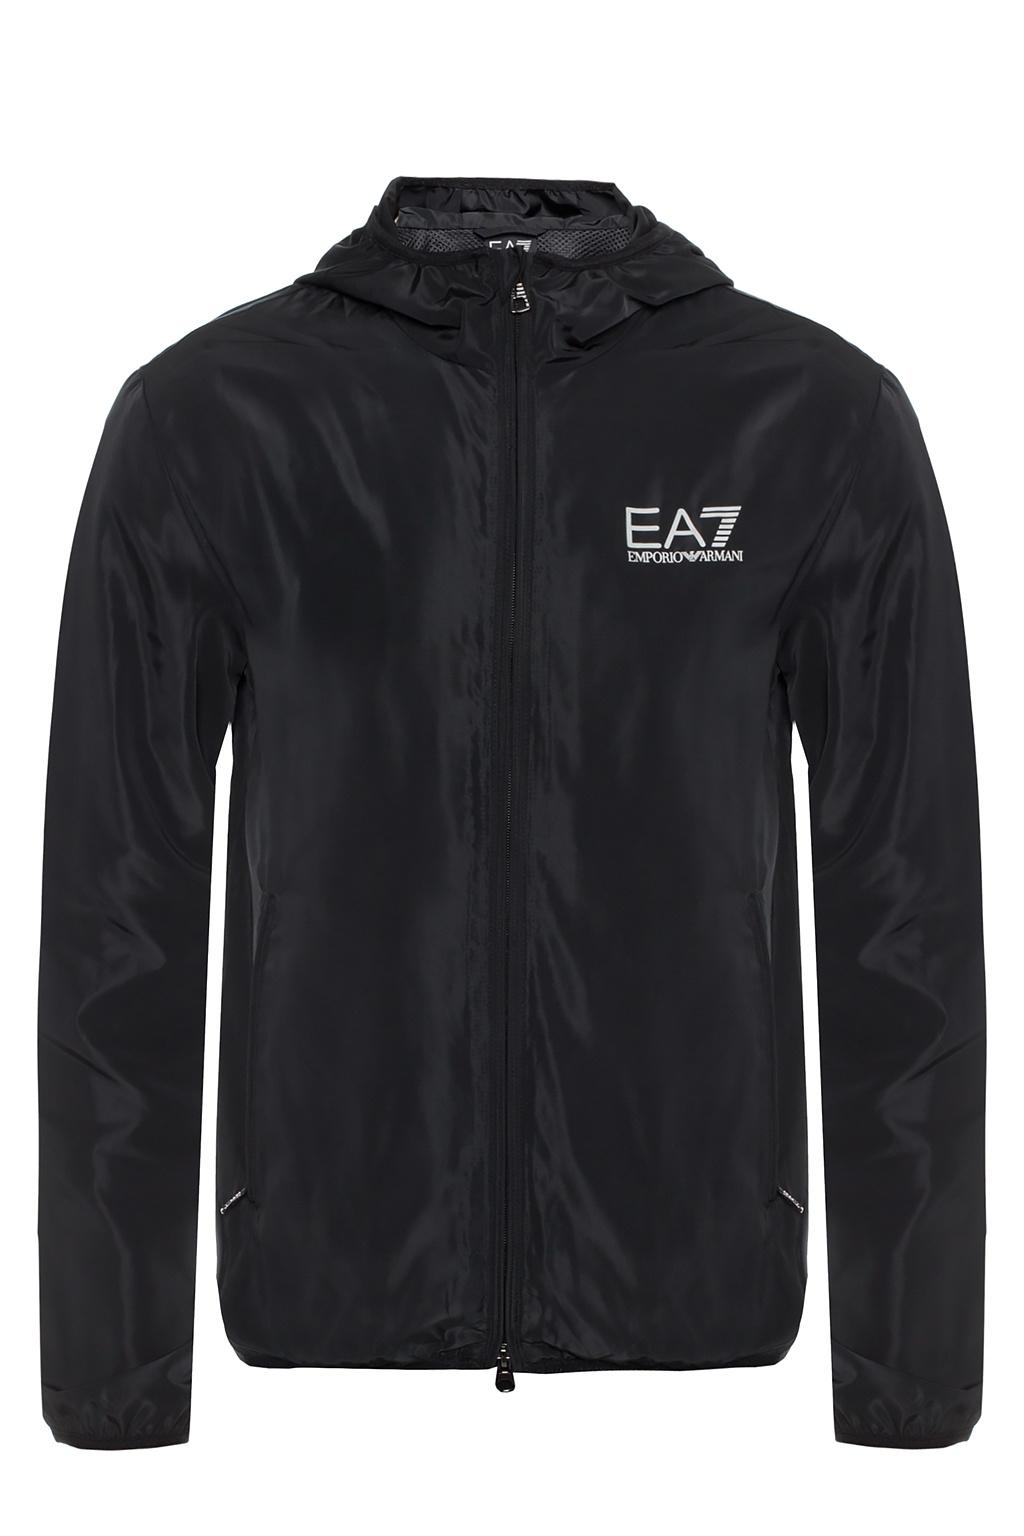 EA7 Logo-printed Jacket in Black for Men - Lyst